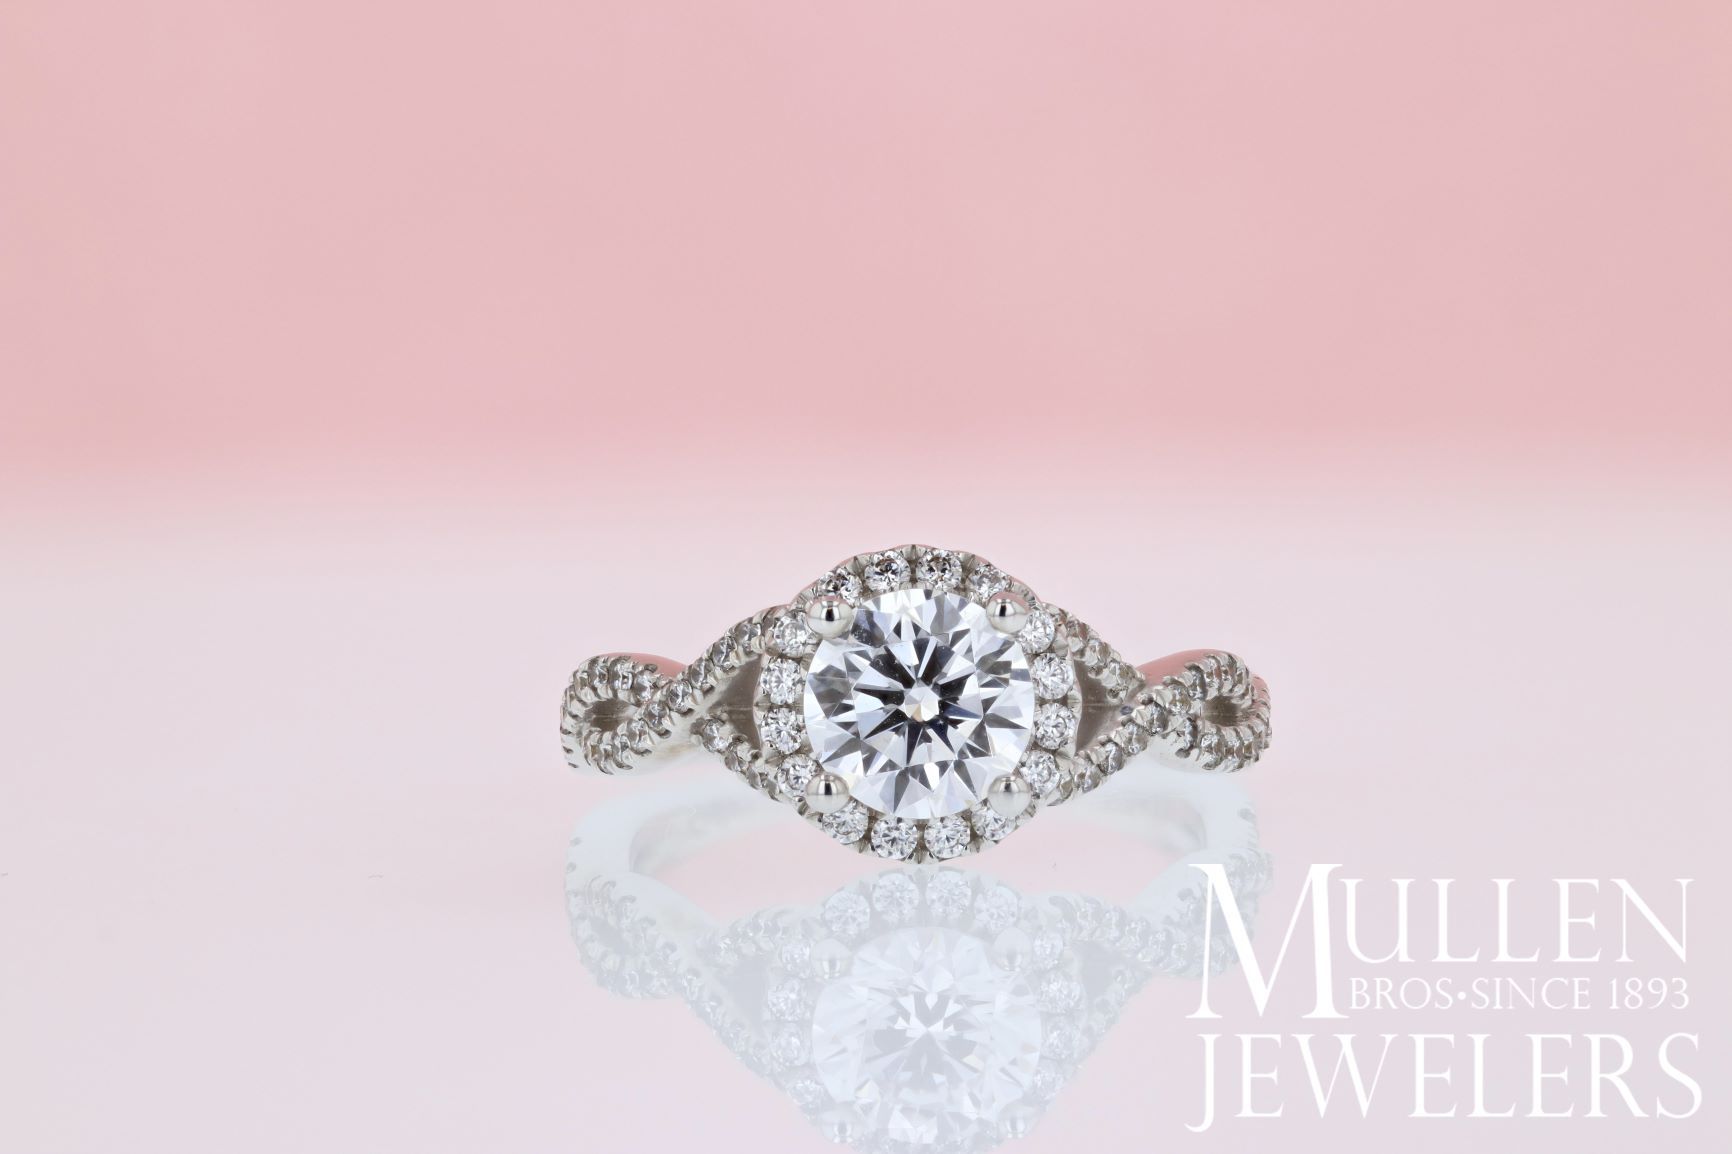 Stephanie Diamond Engagement Ring -18K White Gold, Pave, 1.3 Carat, – Best  Brilliance